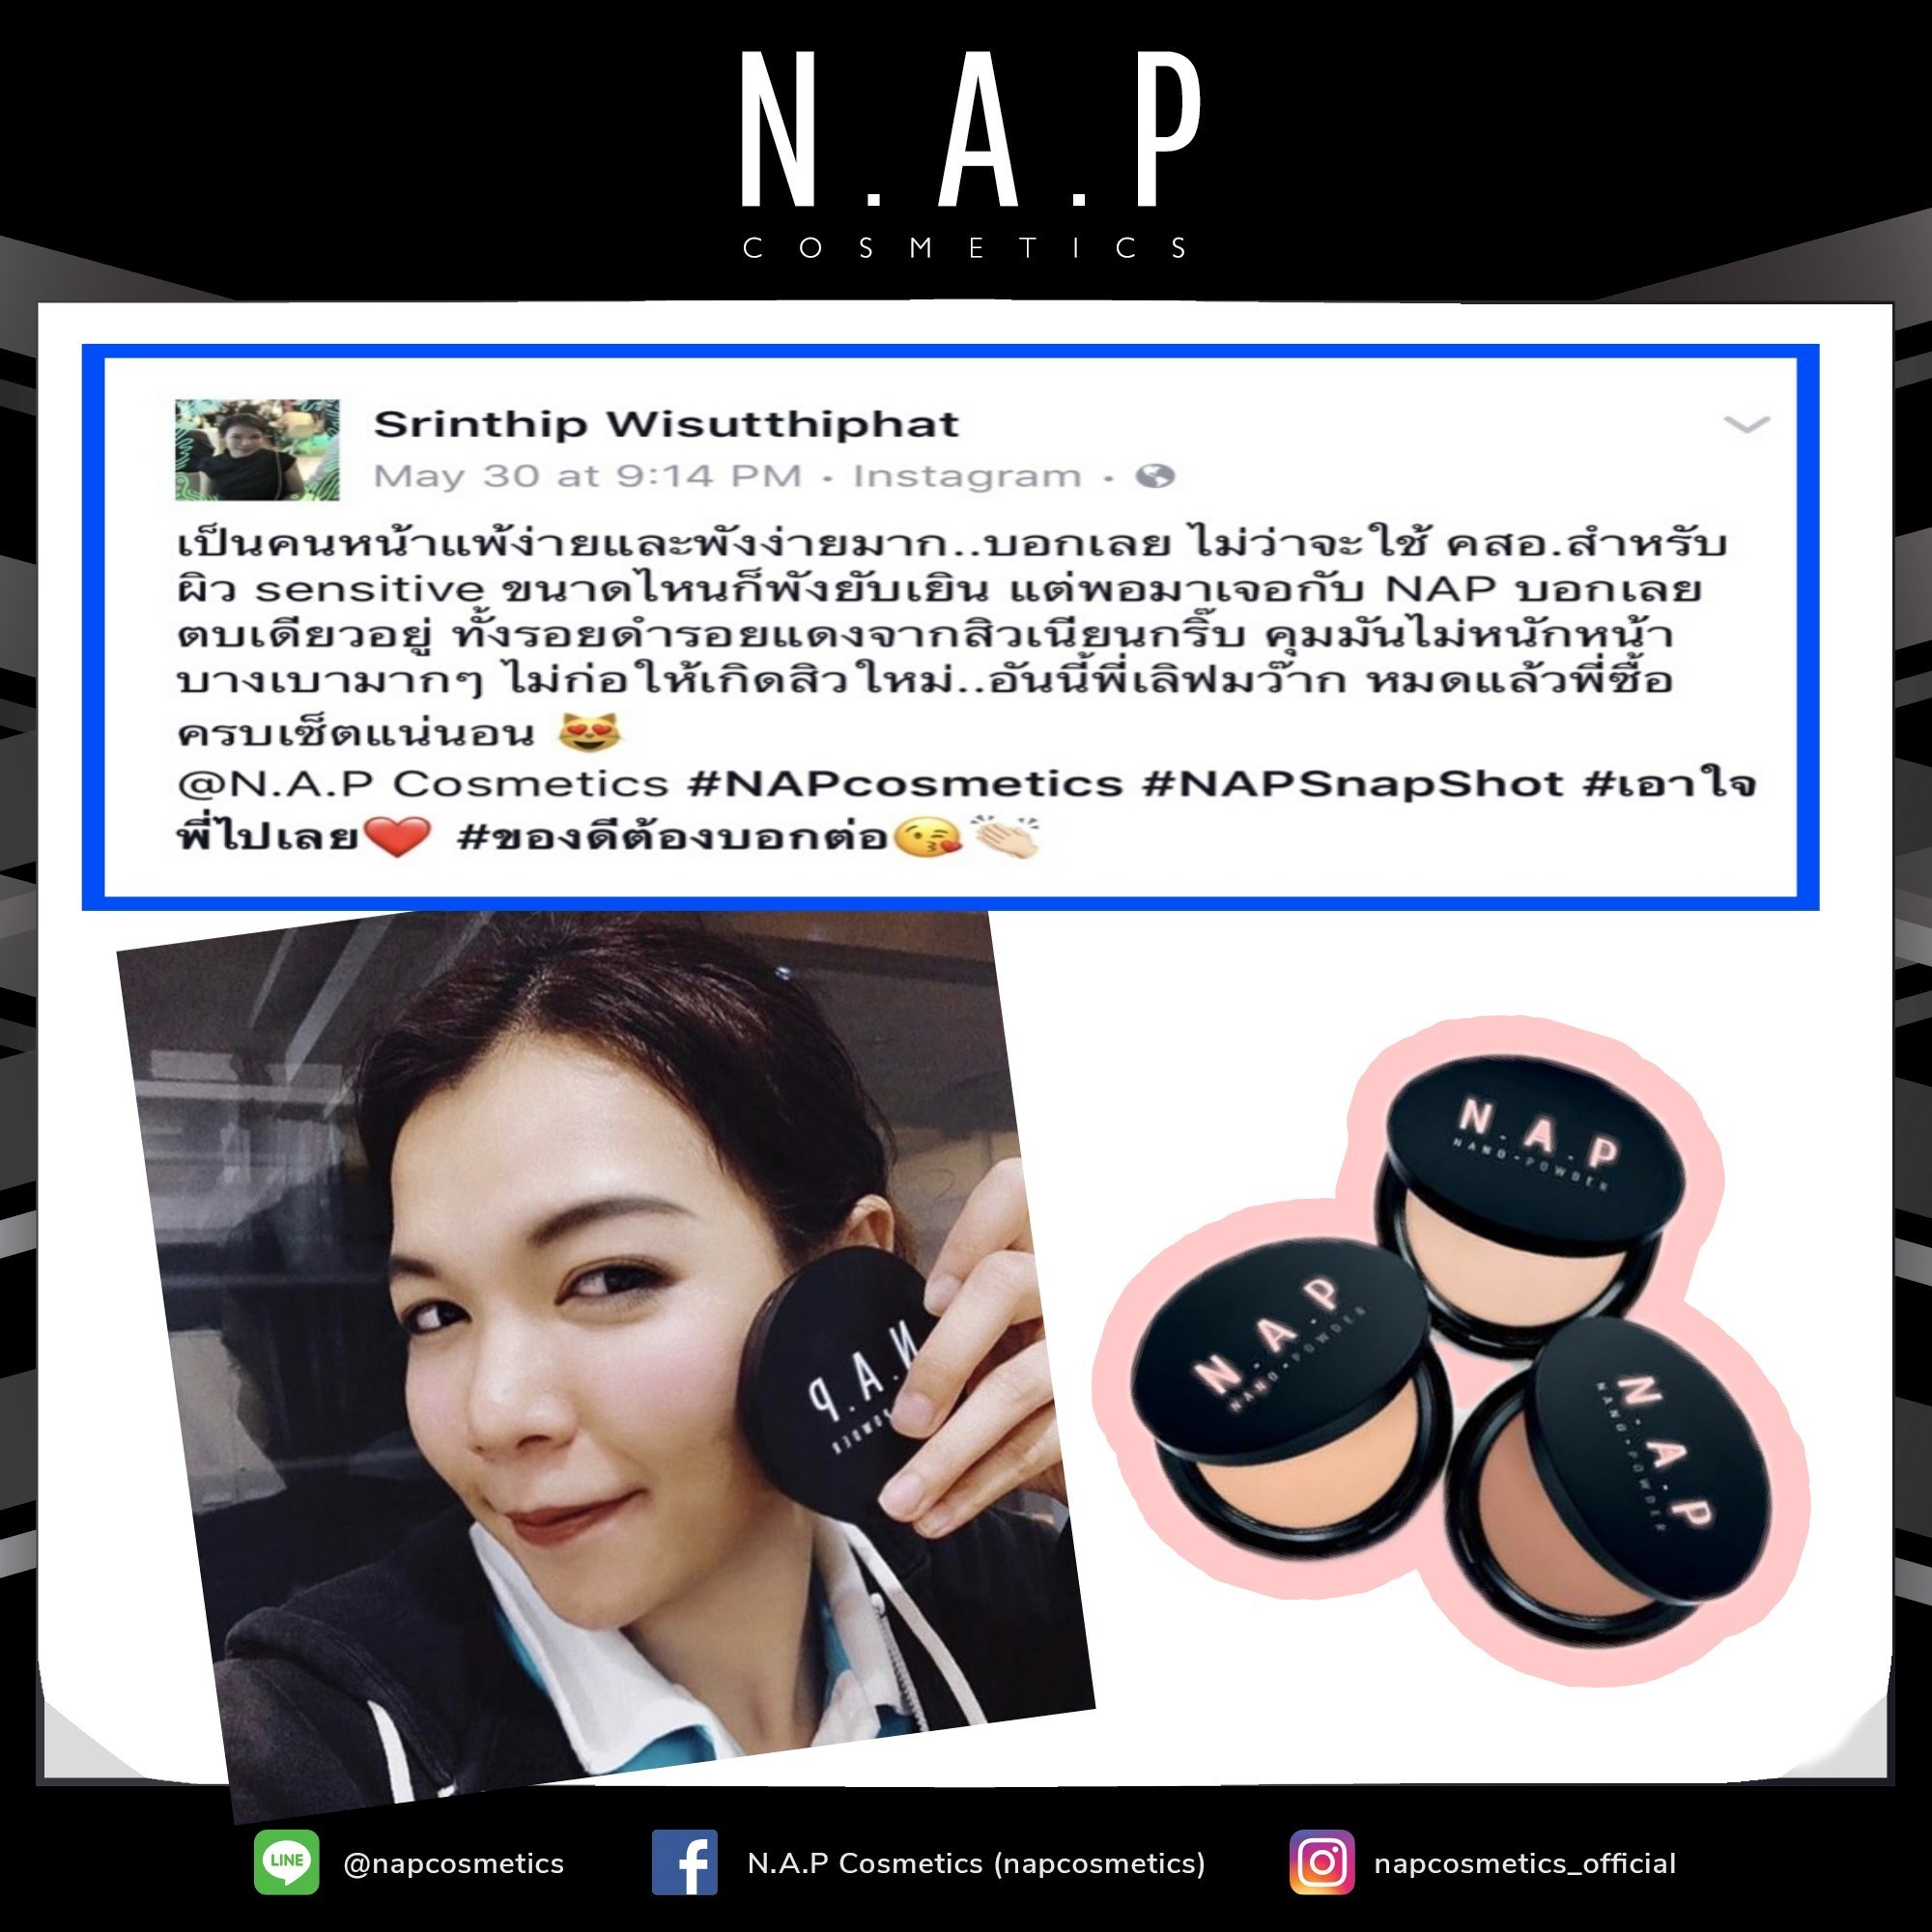 N.A.P cosmetics